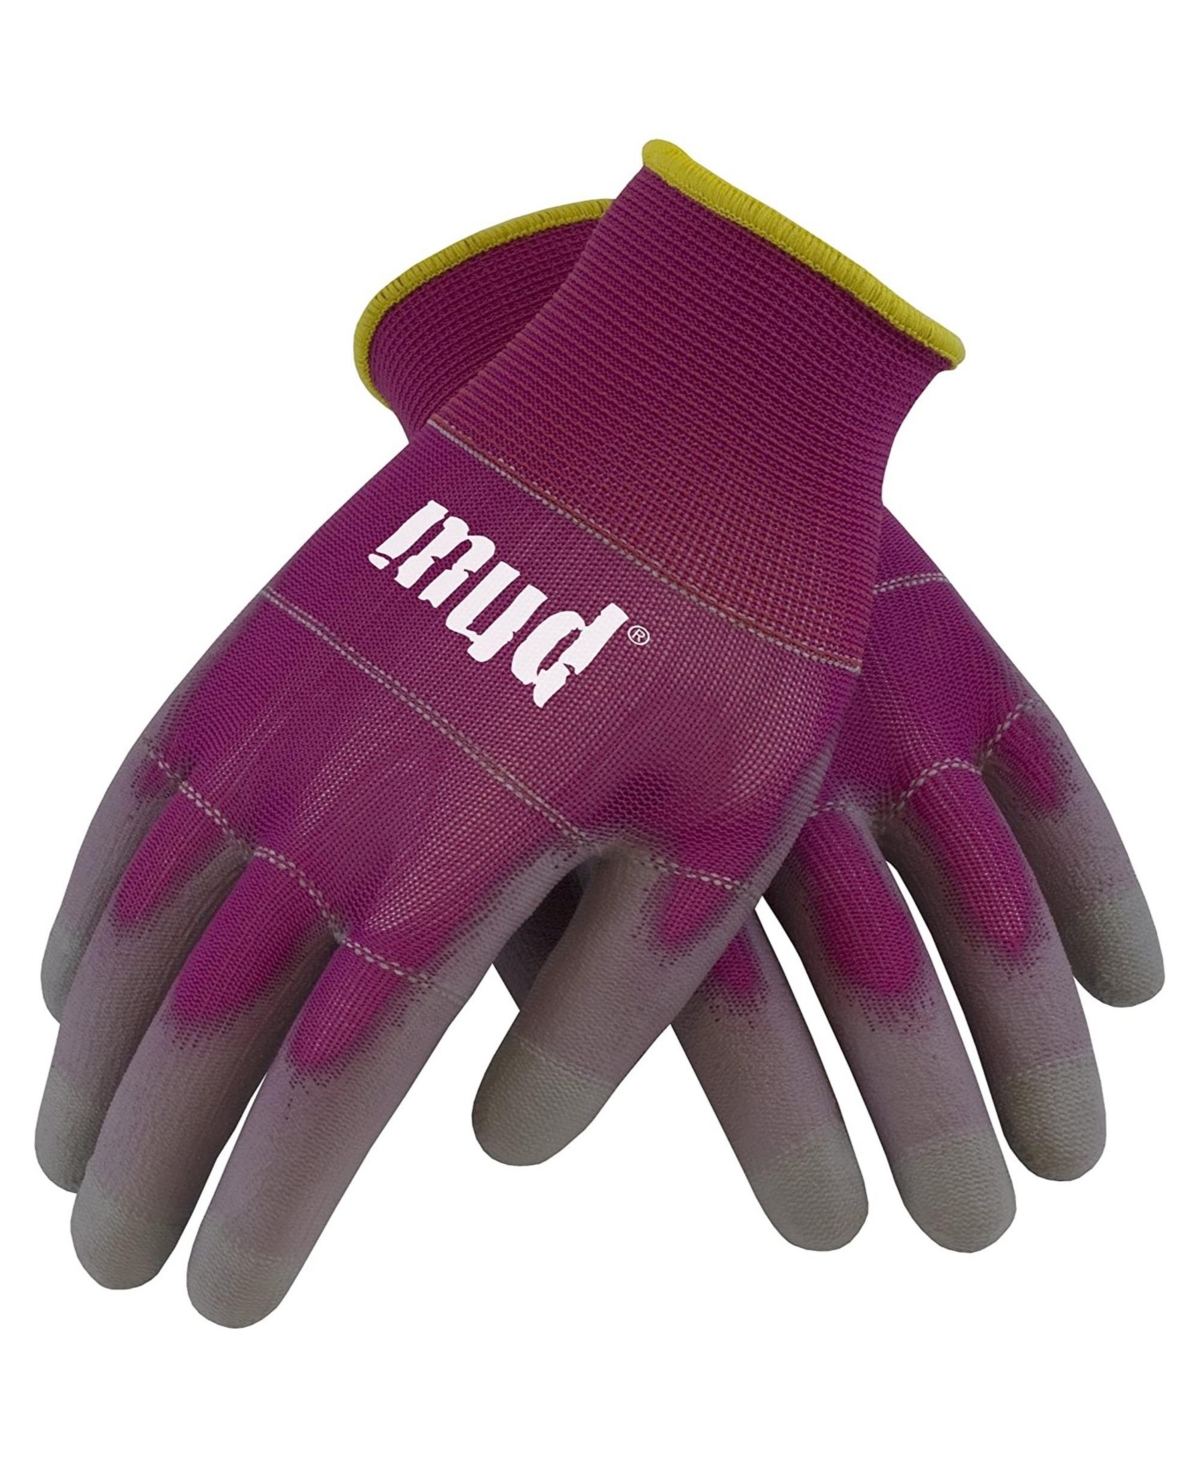 Safety Works 028R L Smart Mud Womens Garden Gloves, Large, Raspberry - Raspberry